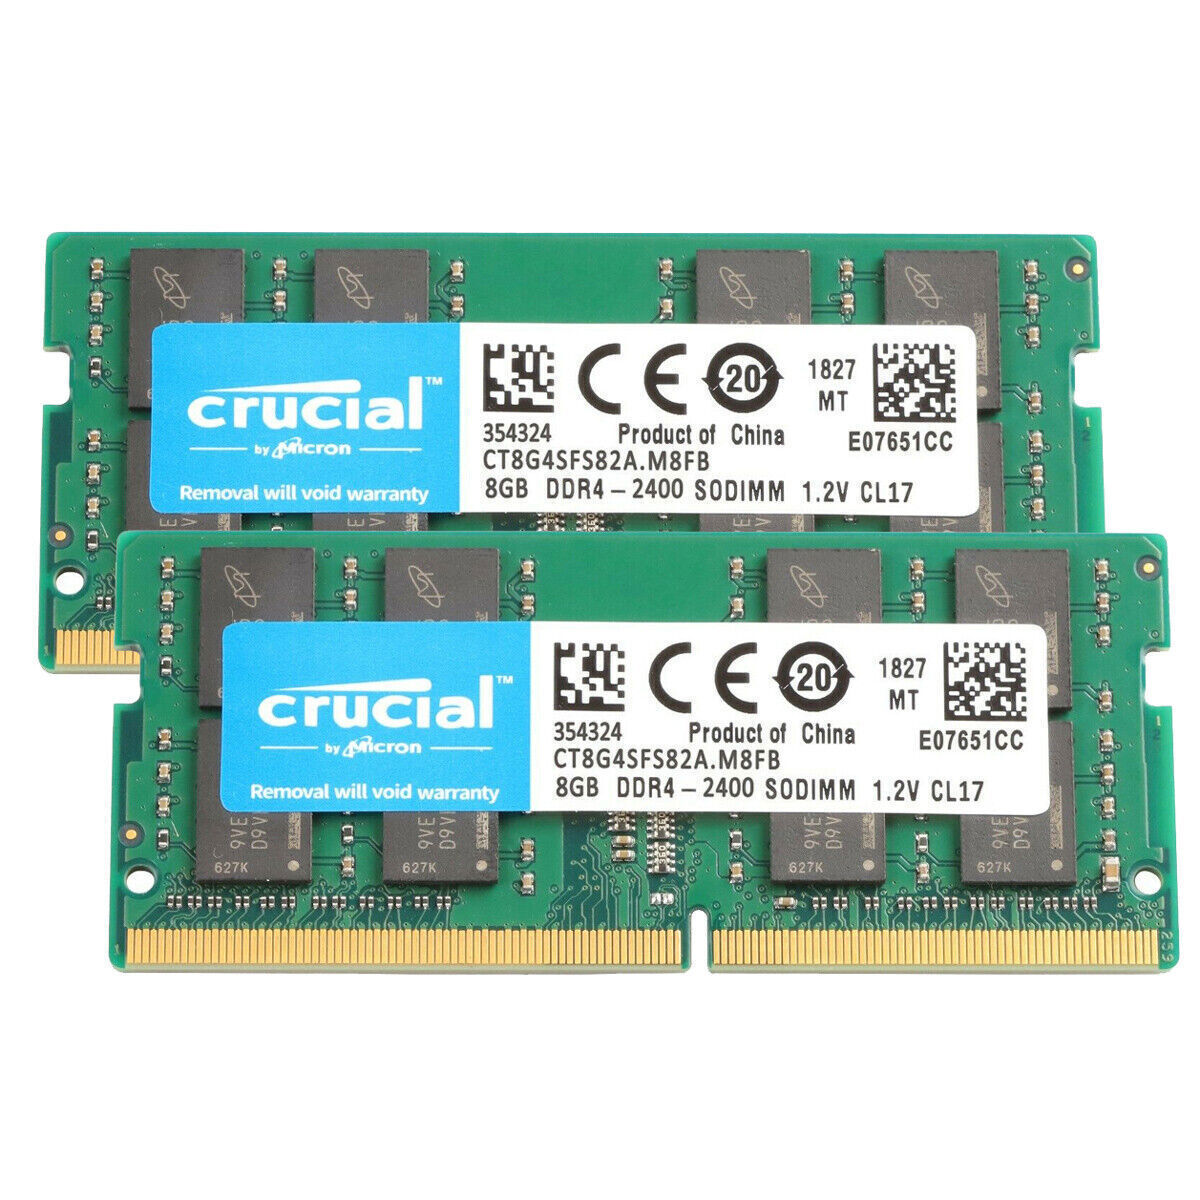 CRUCIAL 8GB DDR4 2400 PC4-19200 Laptop 260-Pin SODIMM Notebook Memory RAM 2x 8G